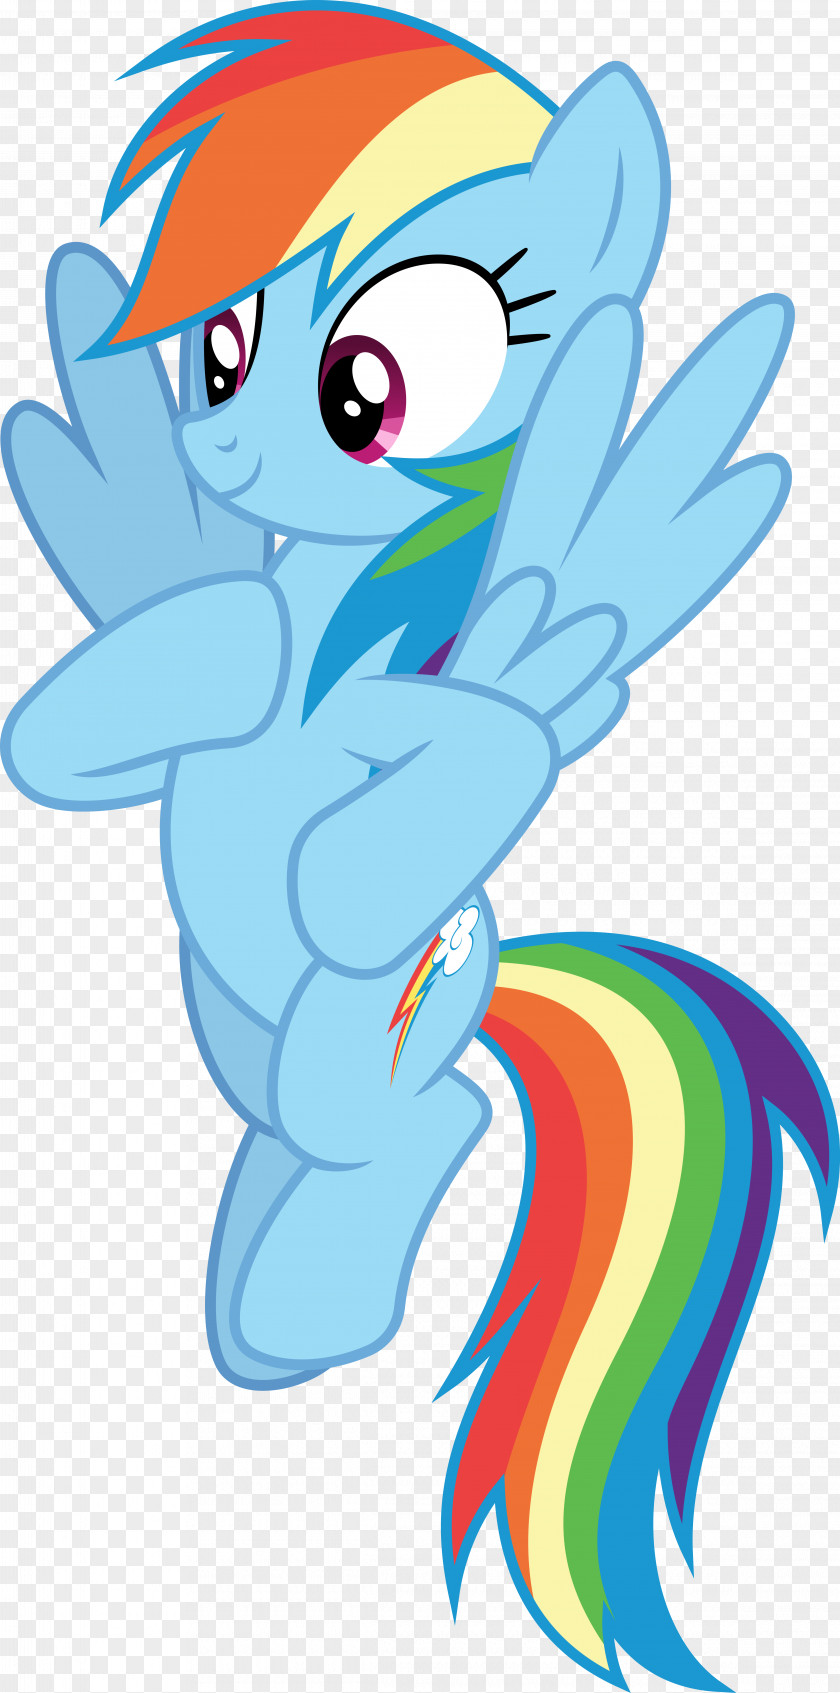 Horse Pony Rainbow Dash Clip Art Illustration PNG